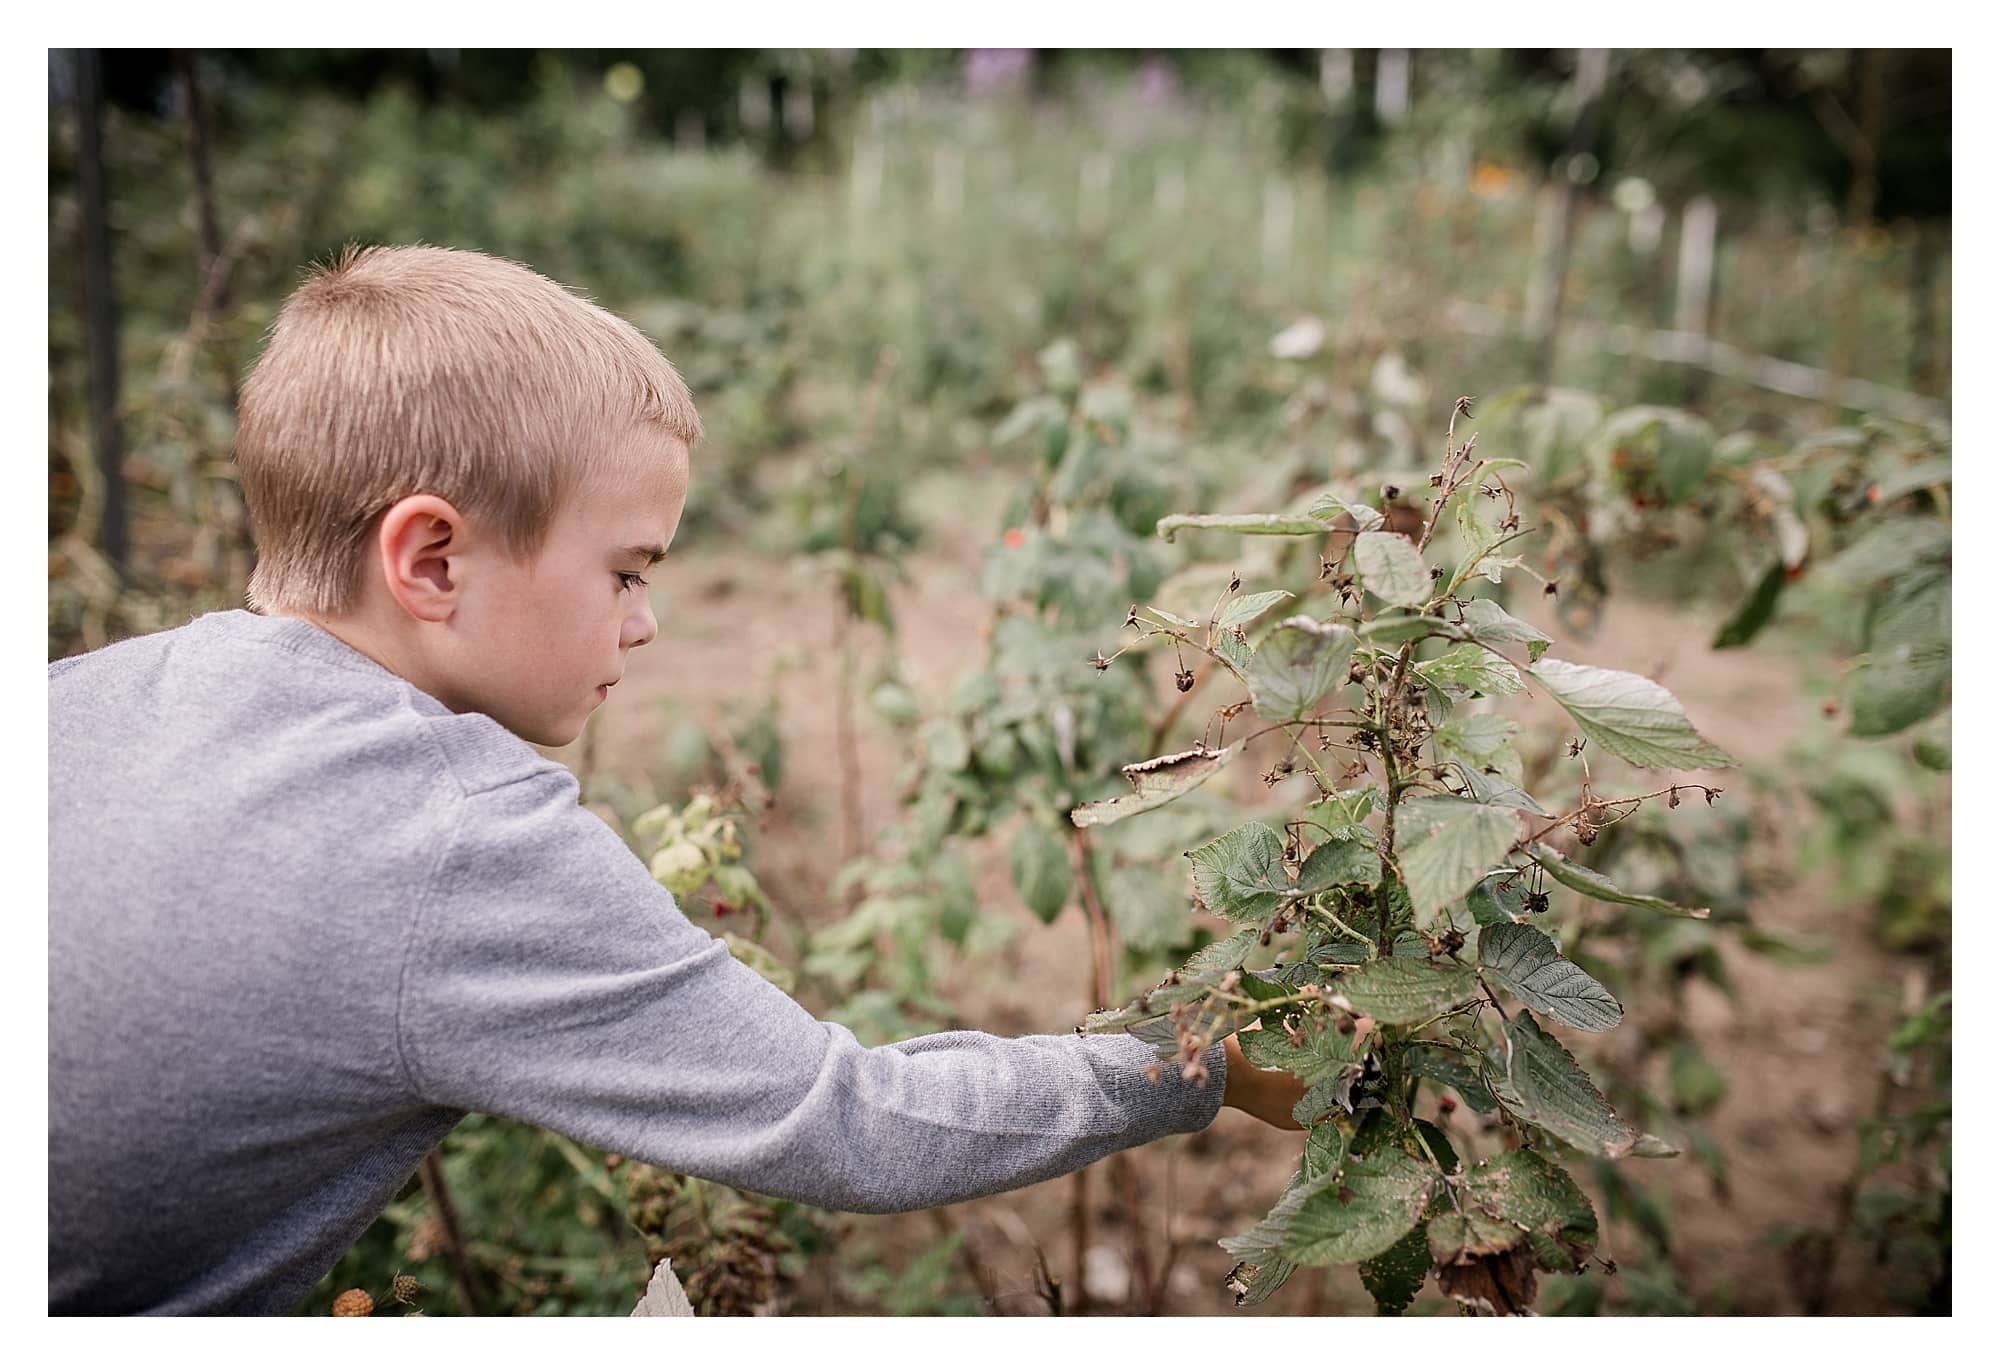 boy picking raspberries